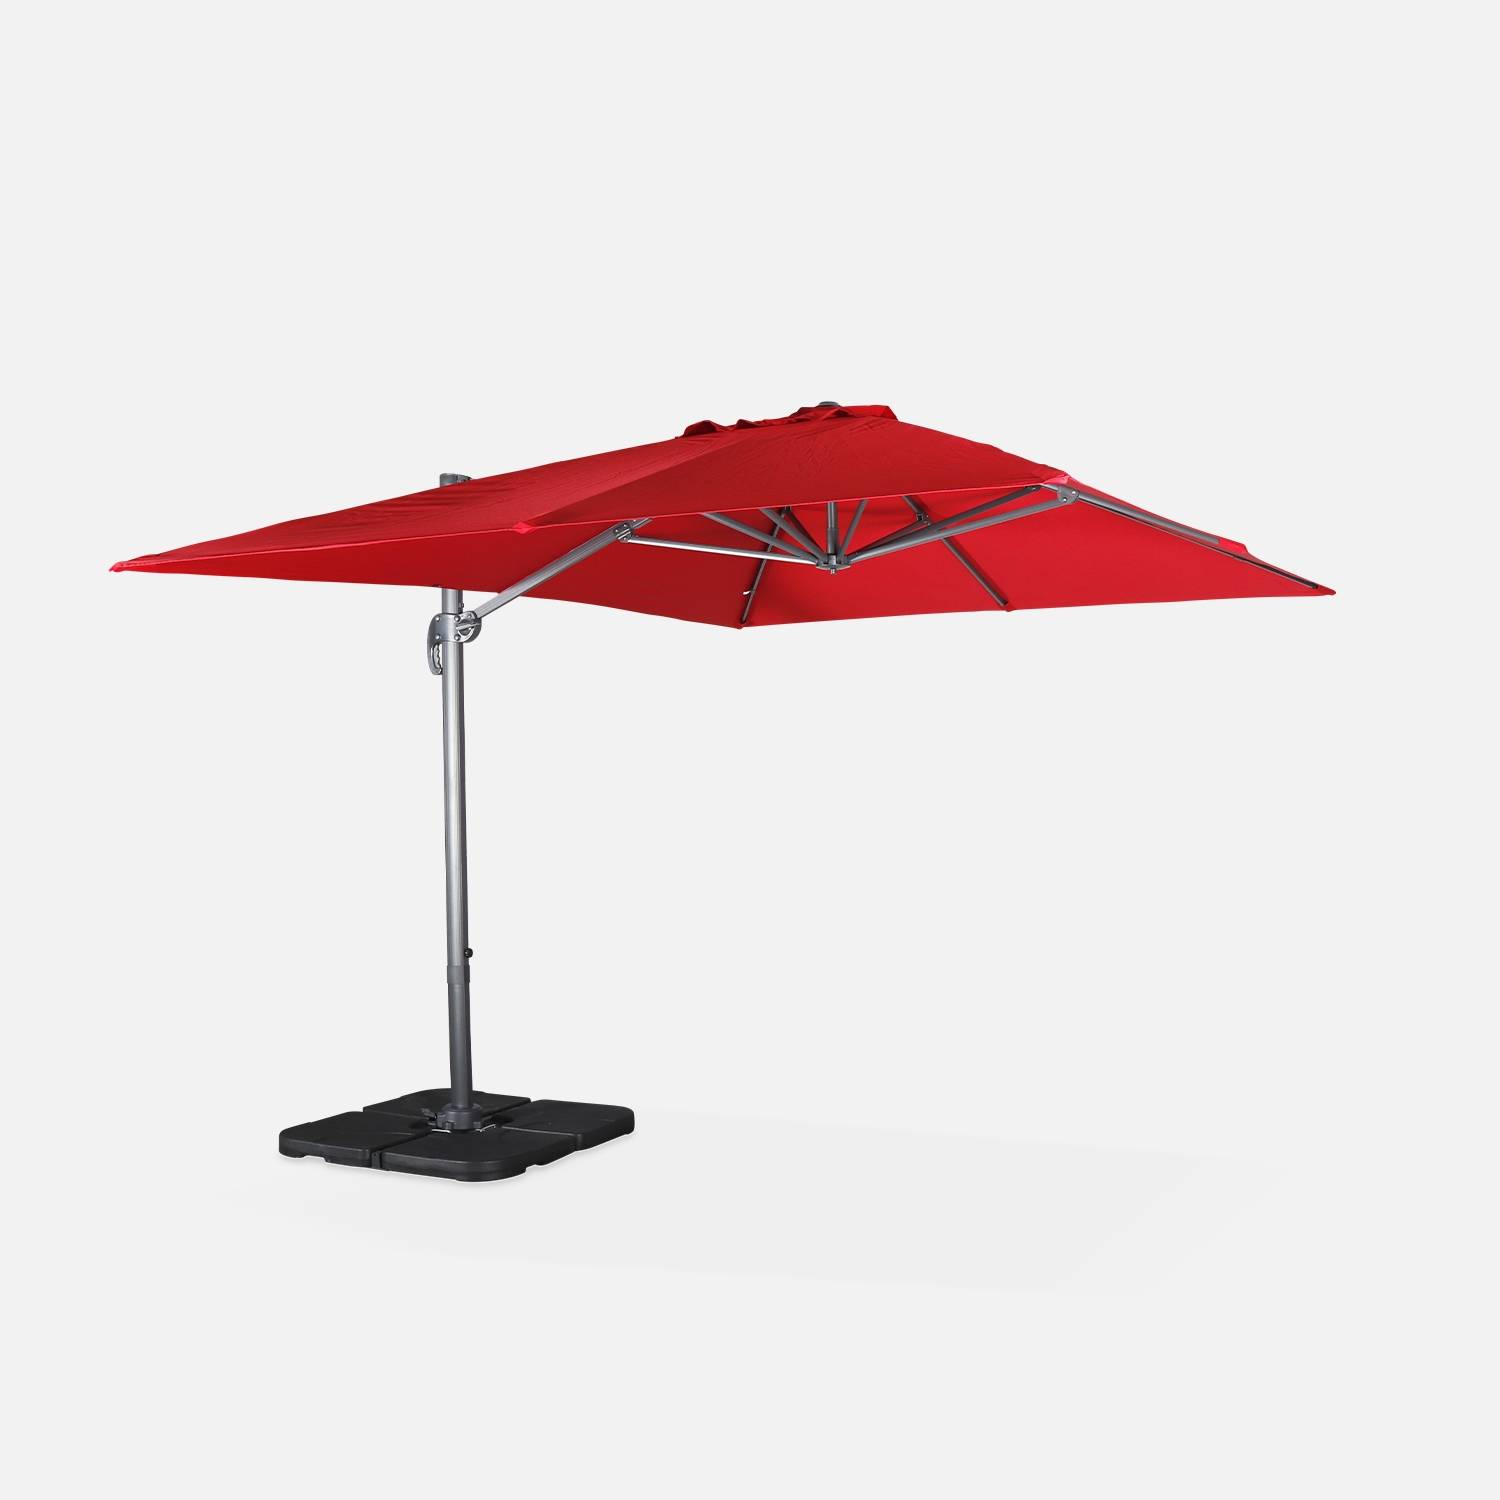 Rode parasol 3x4m + tegels  | sweeek